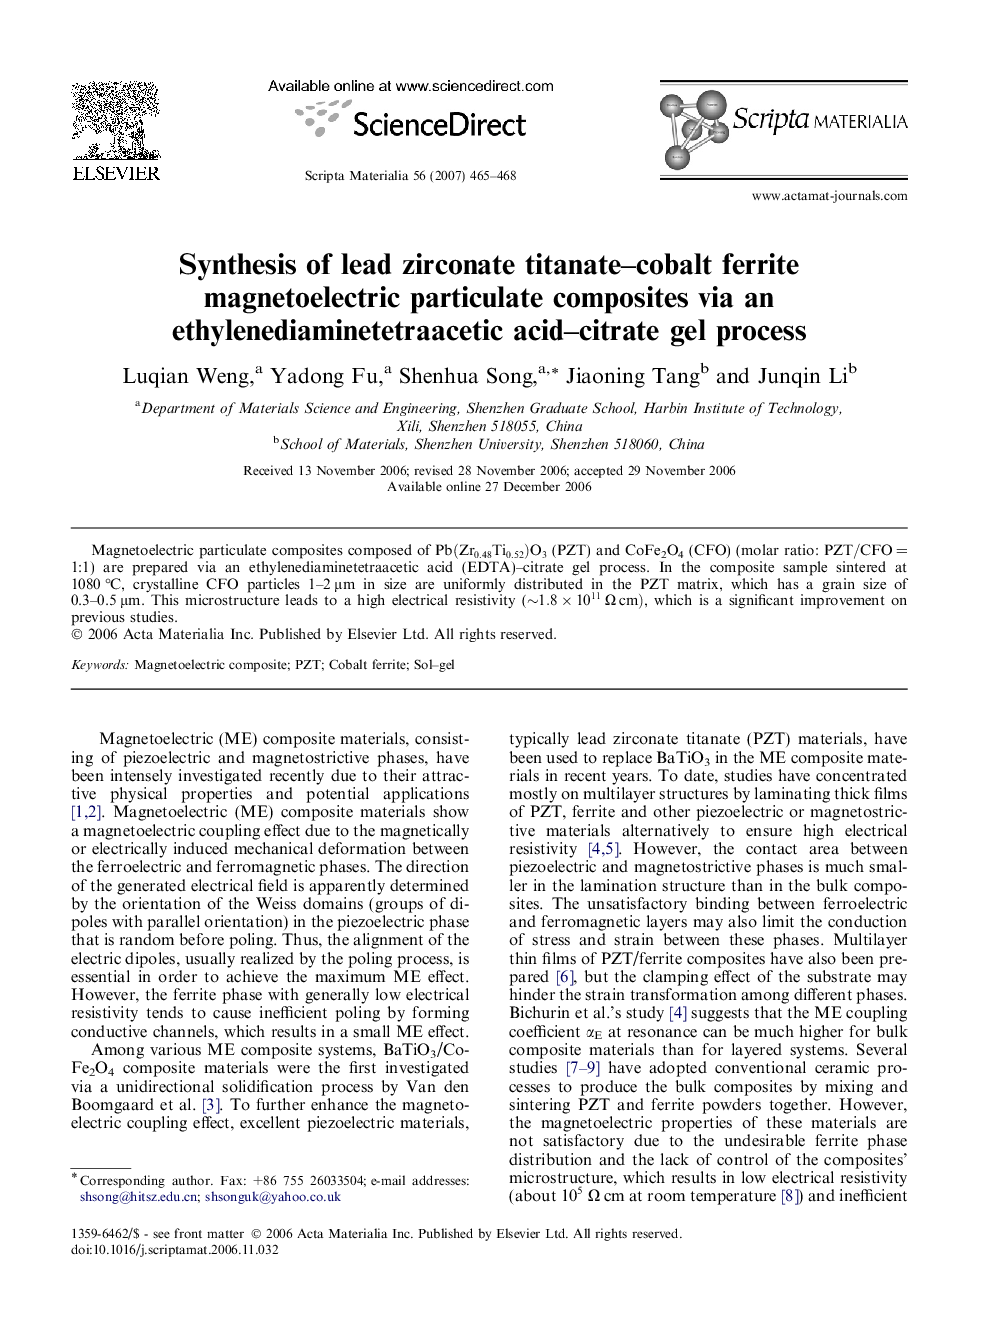 Synthesis of lead zirconate titanate–cobalt ferrite magnetoelectric particulate composites via an ethylenediaminetetraacetic acid–citrate gel process